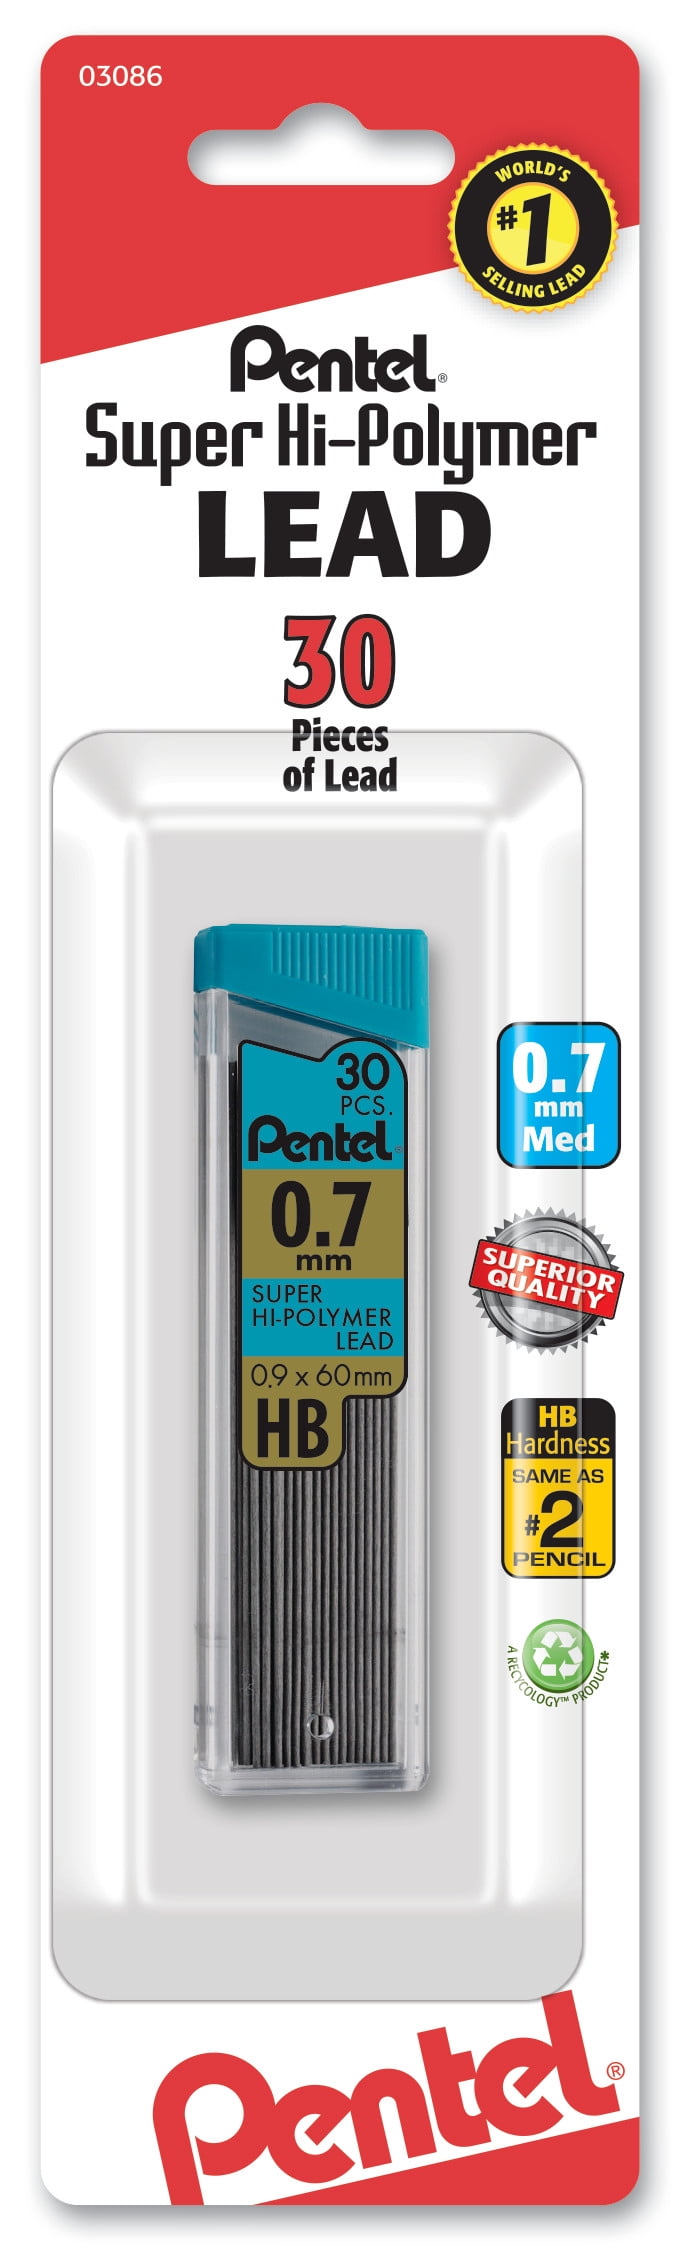 Pentel Super Hi-Polymer Lead Refill (0.7mm) Medium, HB, 30 pcs/Tube 1-Pk